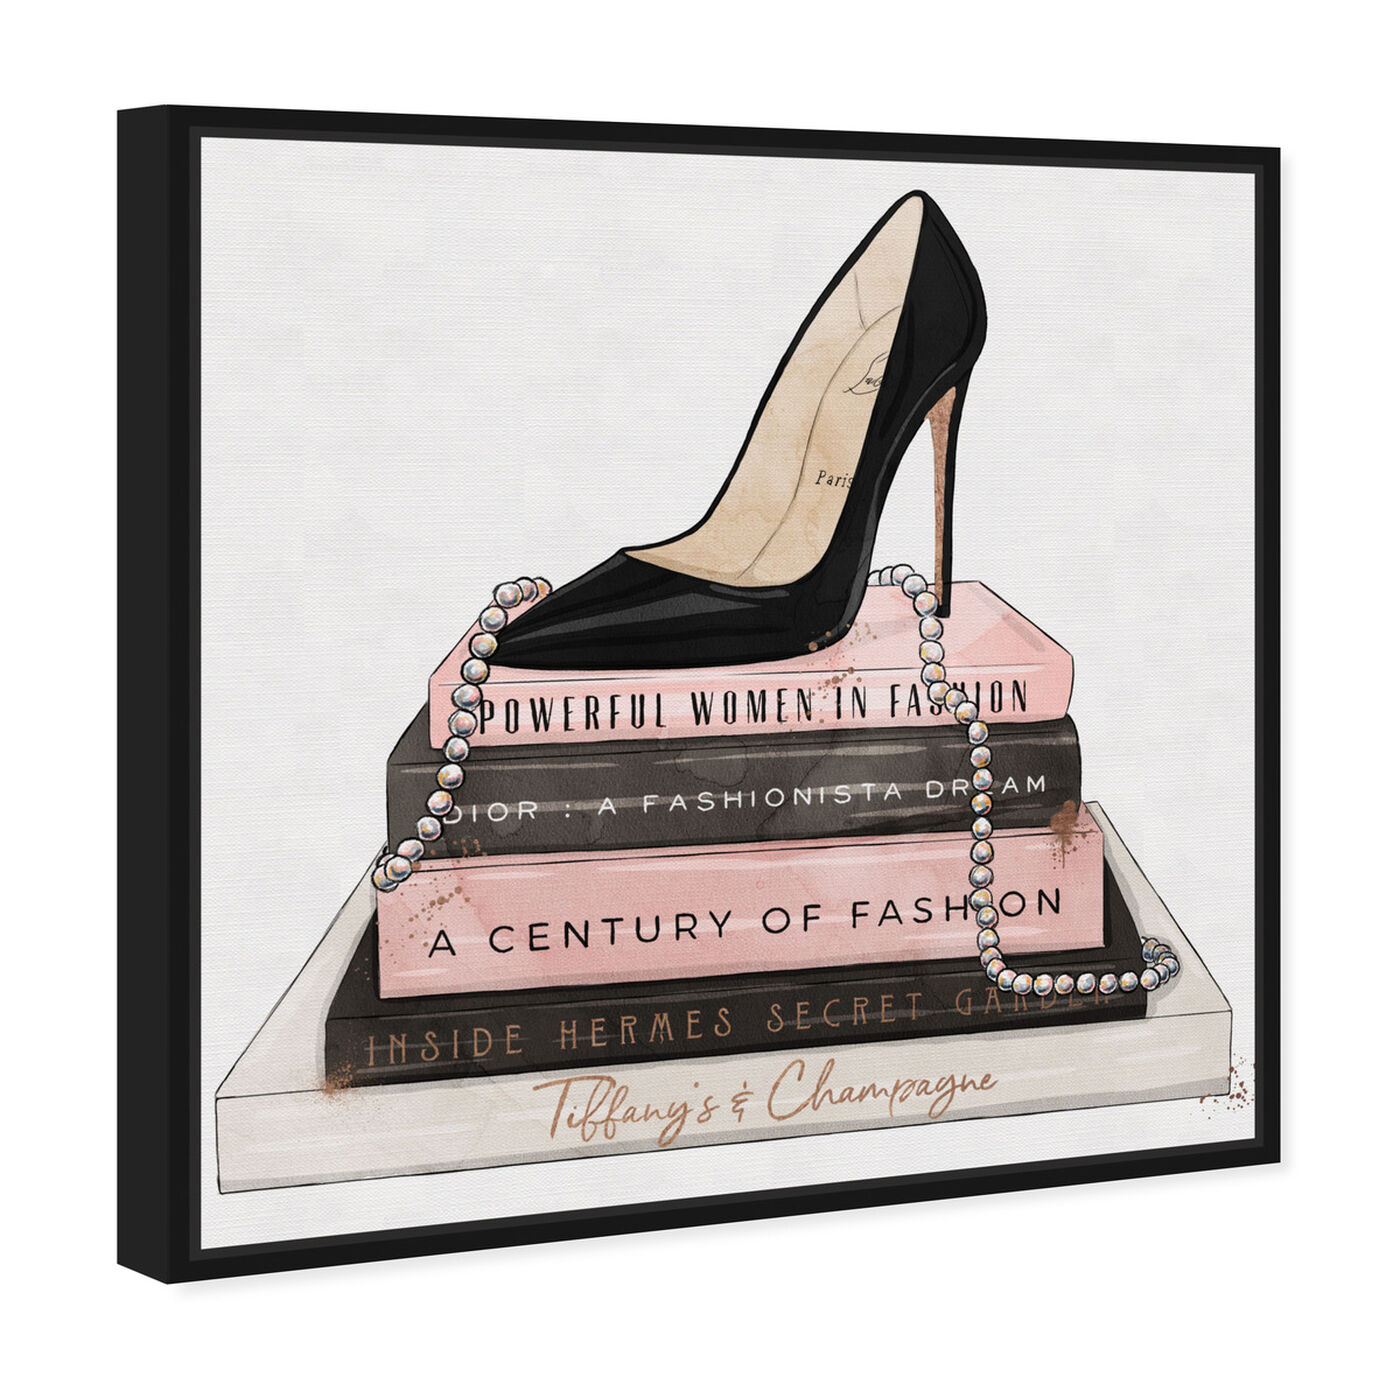 Classic Stiletto and High Fashion Books